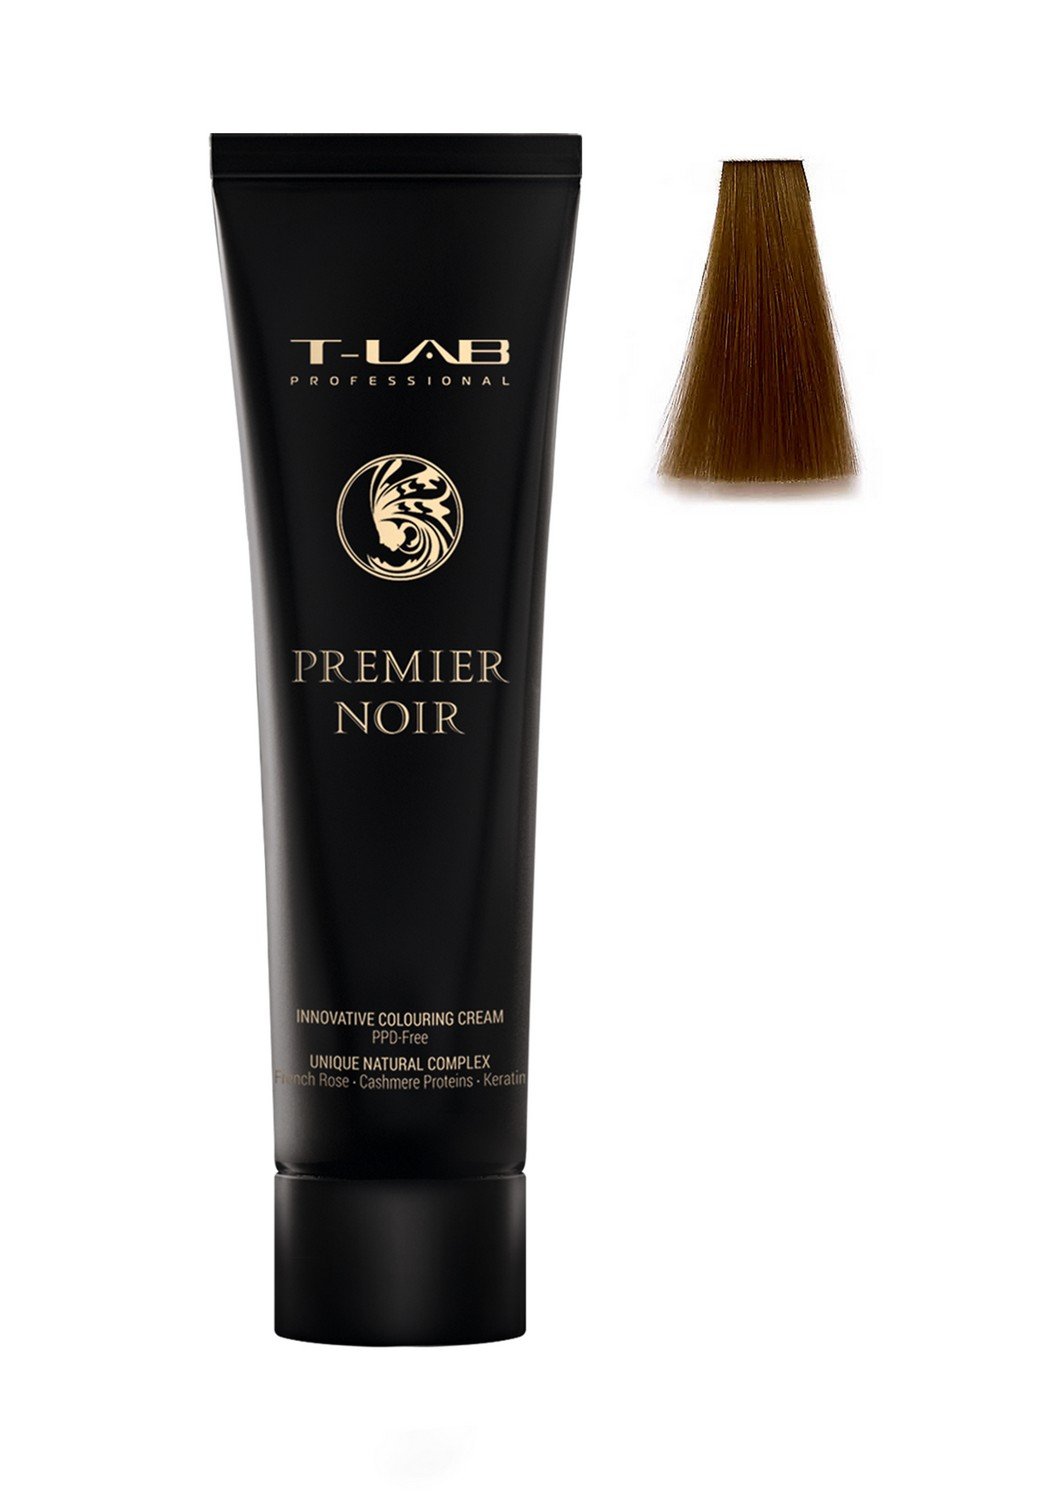 Крем-краска T-LAB Professional Premier Noir colouring cream, оттенок 9.00 (deep natural very light blonde) - фото 2